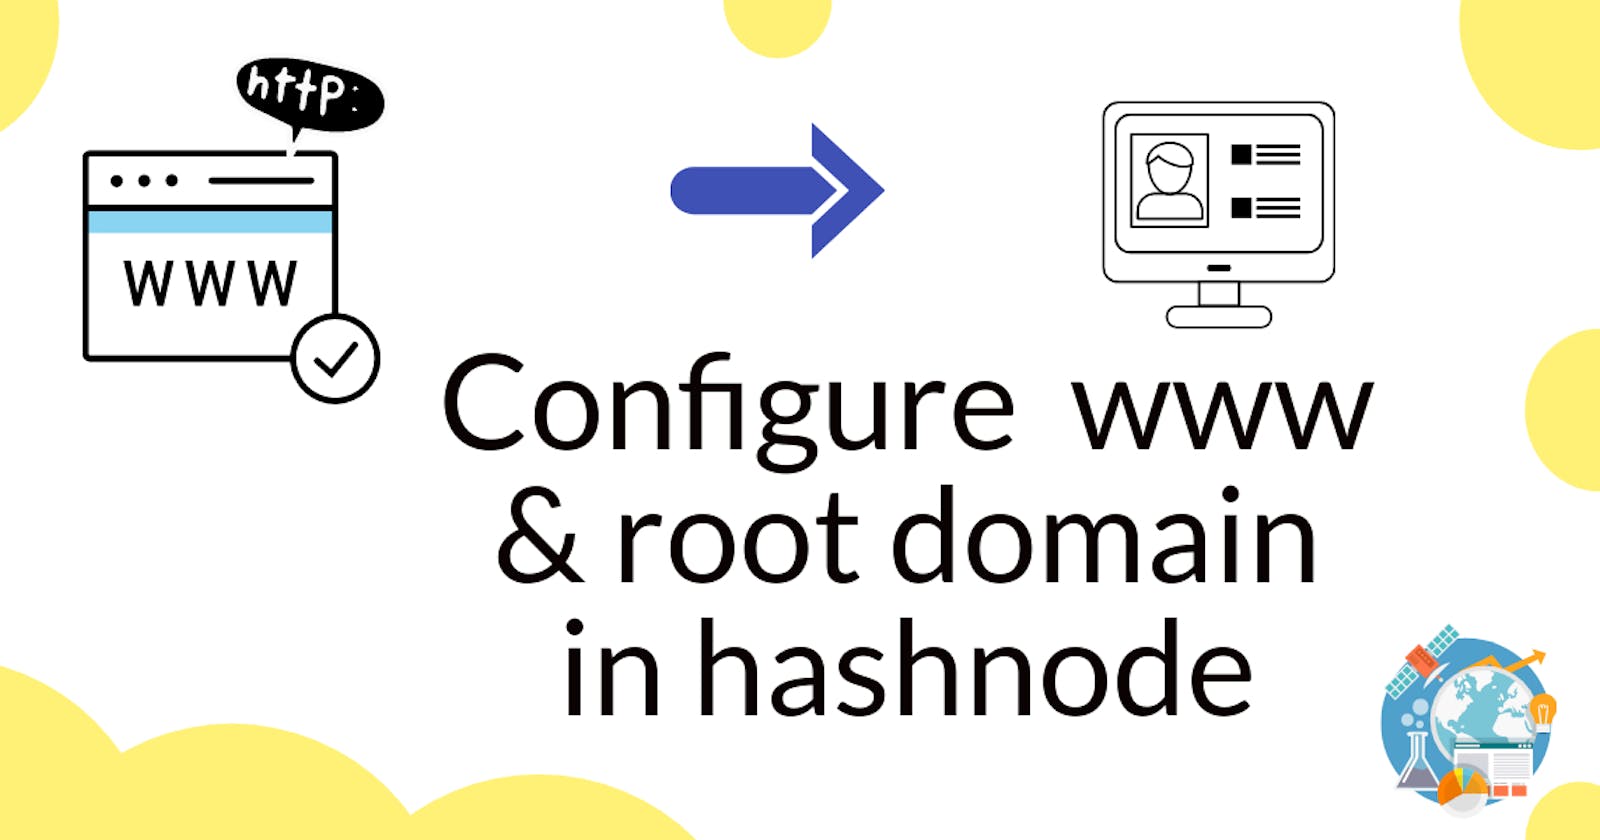 How to configure www & root domain in hashnode over SSL.